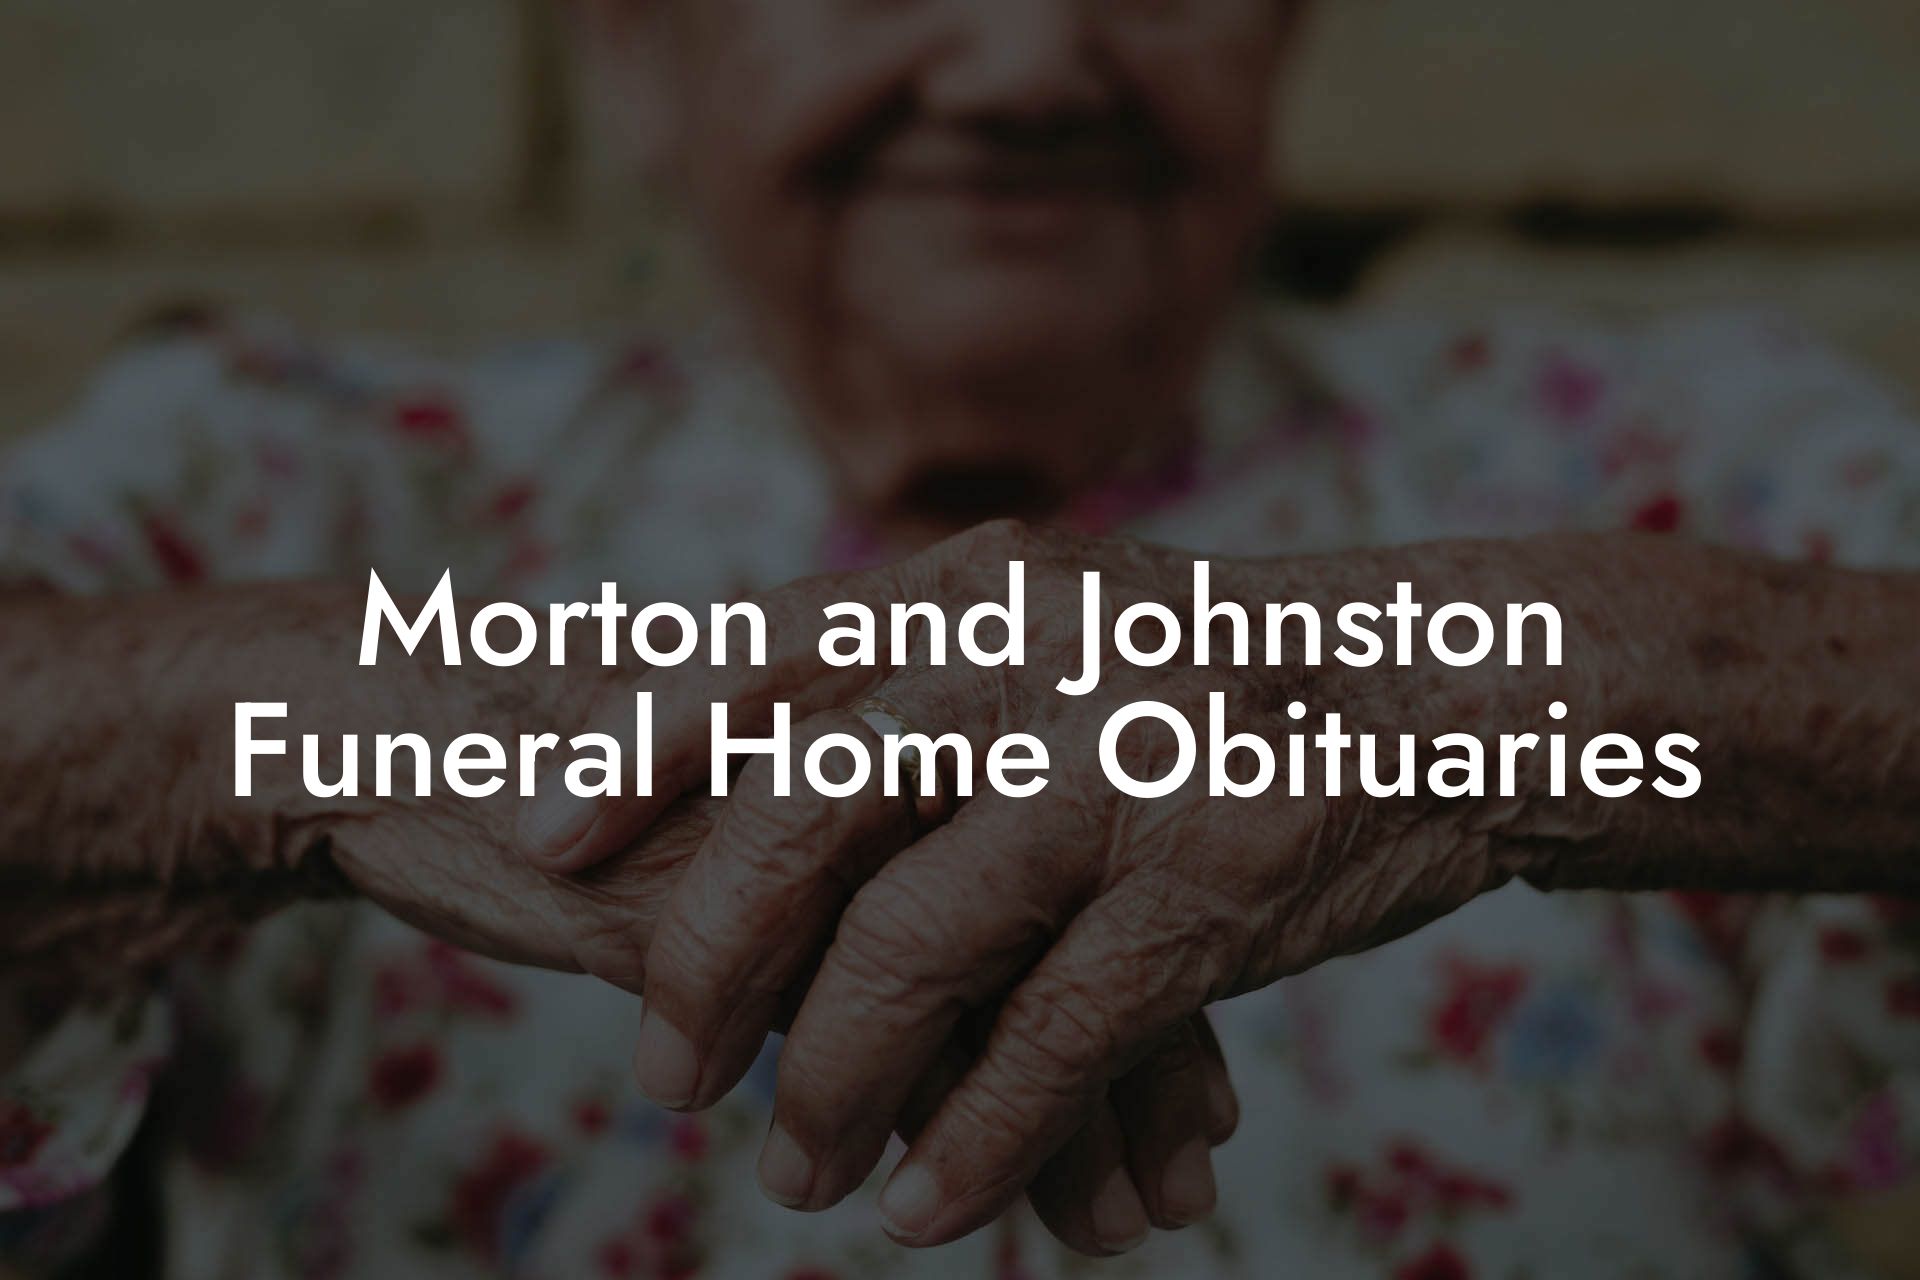 Morton and Johnston Funeral Home Obituaries